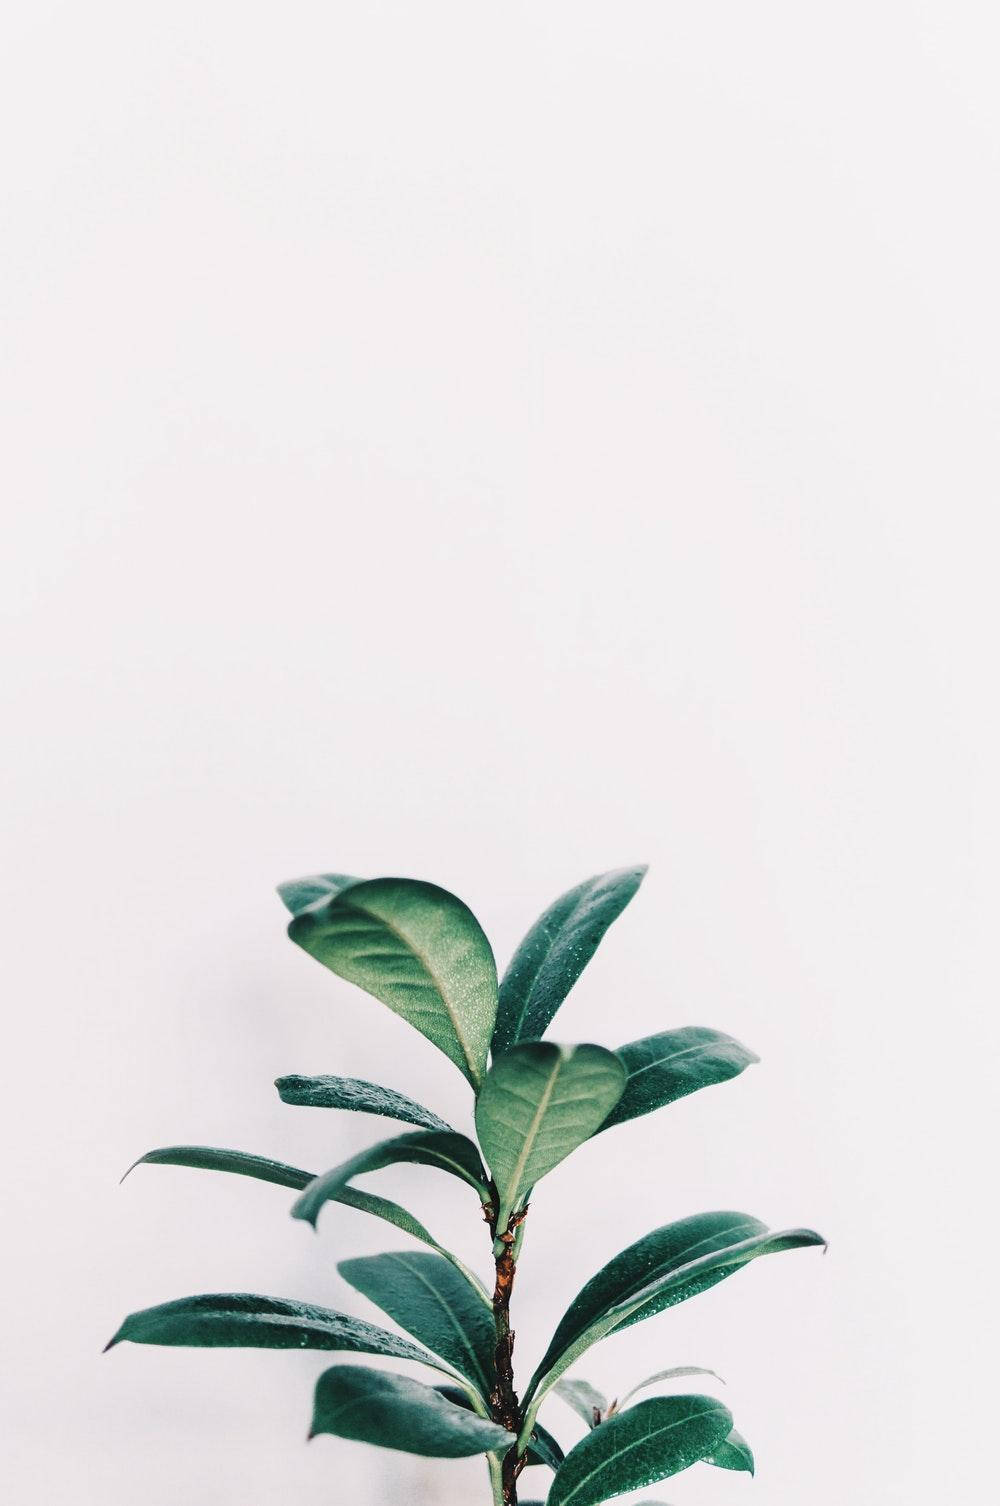 Minimalist Aesthetic Green Rubber Plant Wallpaper